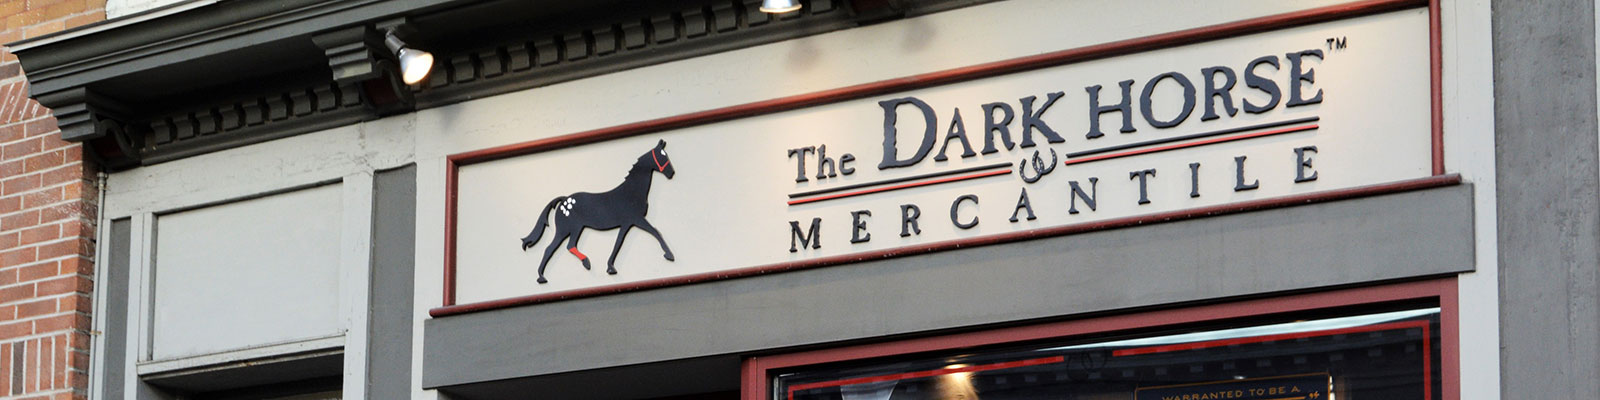 Dark Horse storefront sign